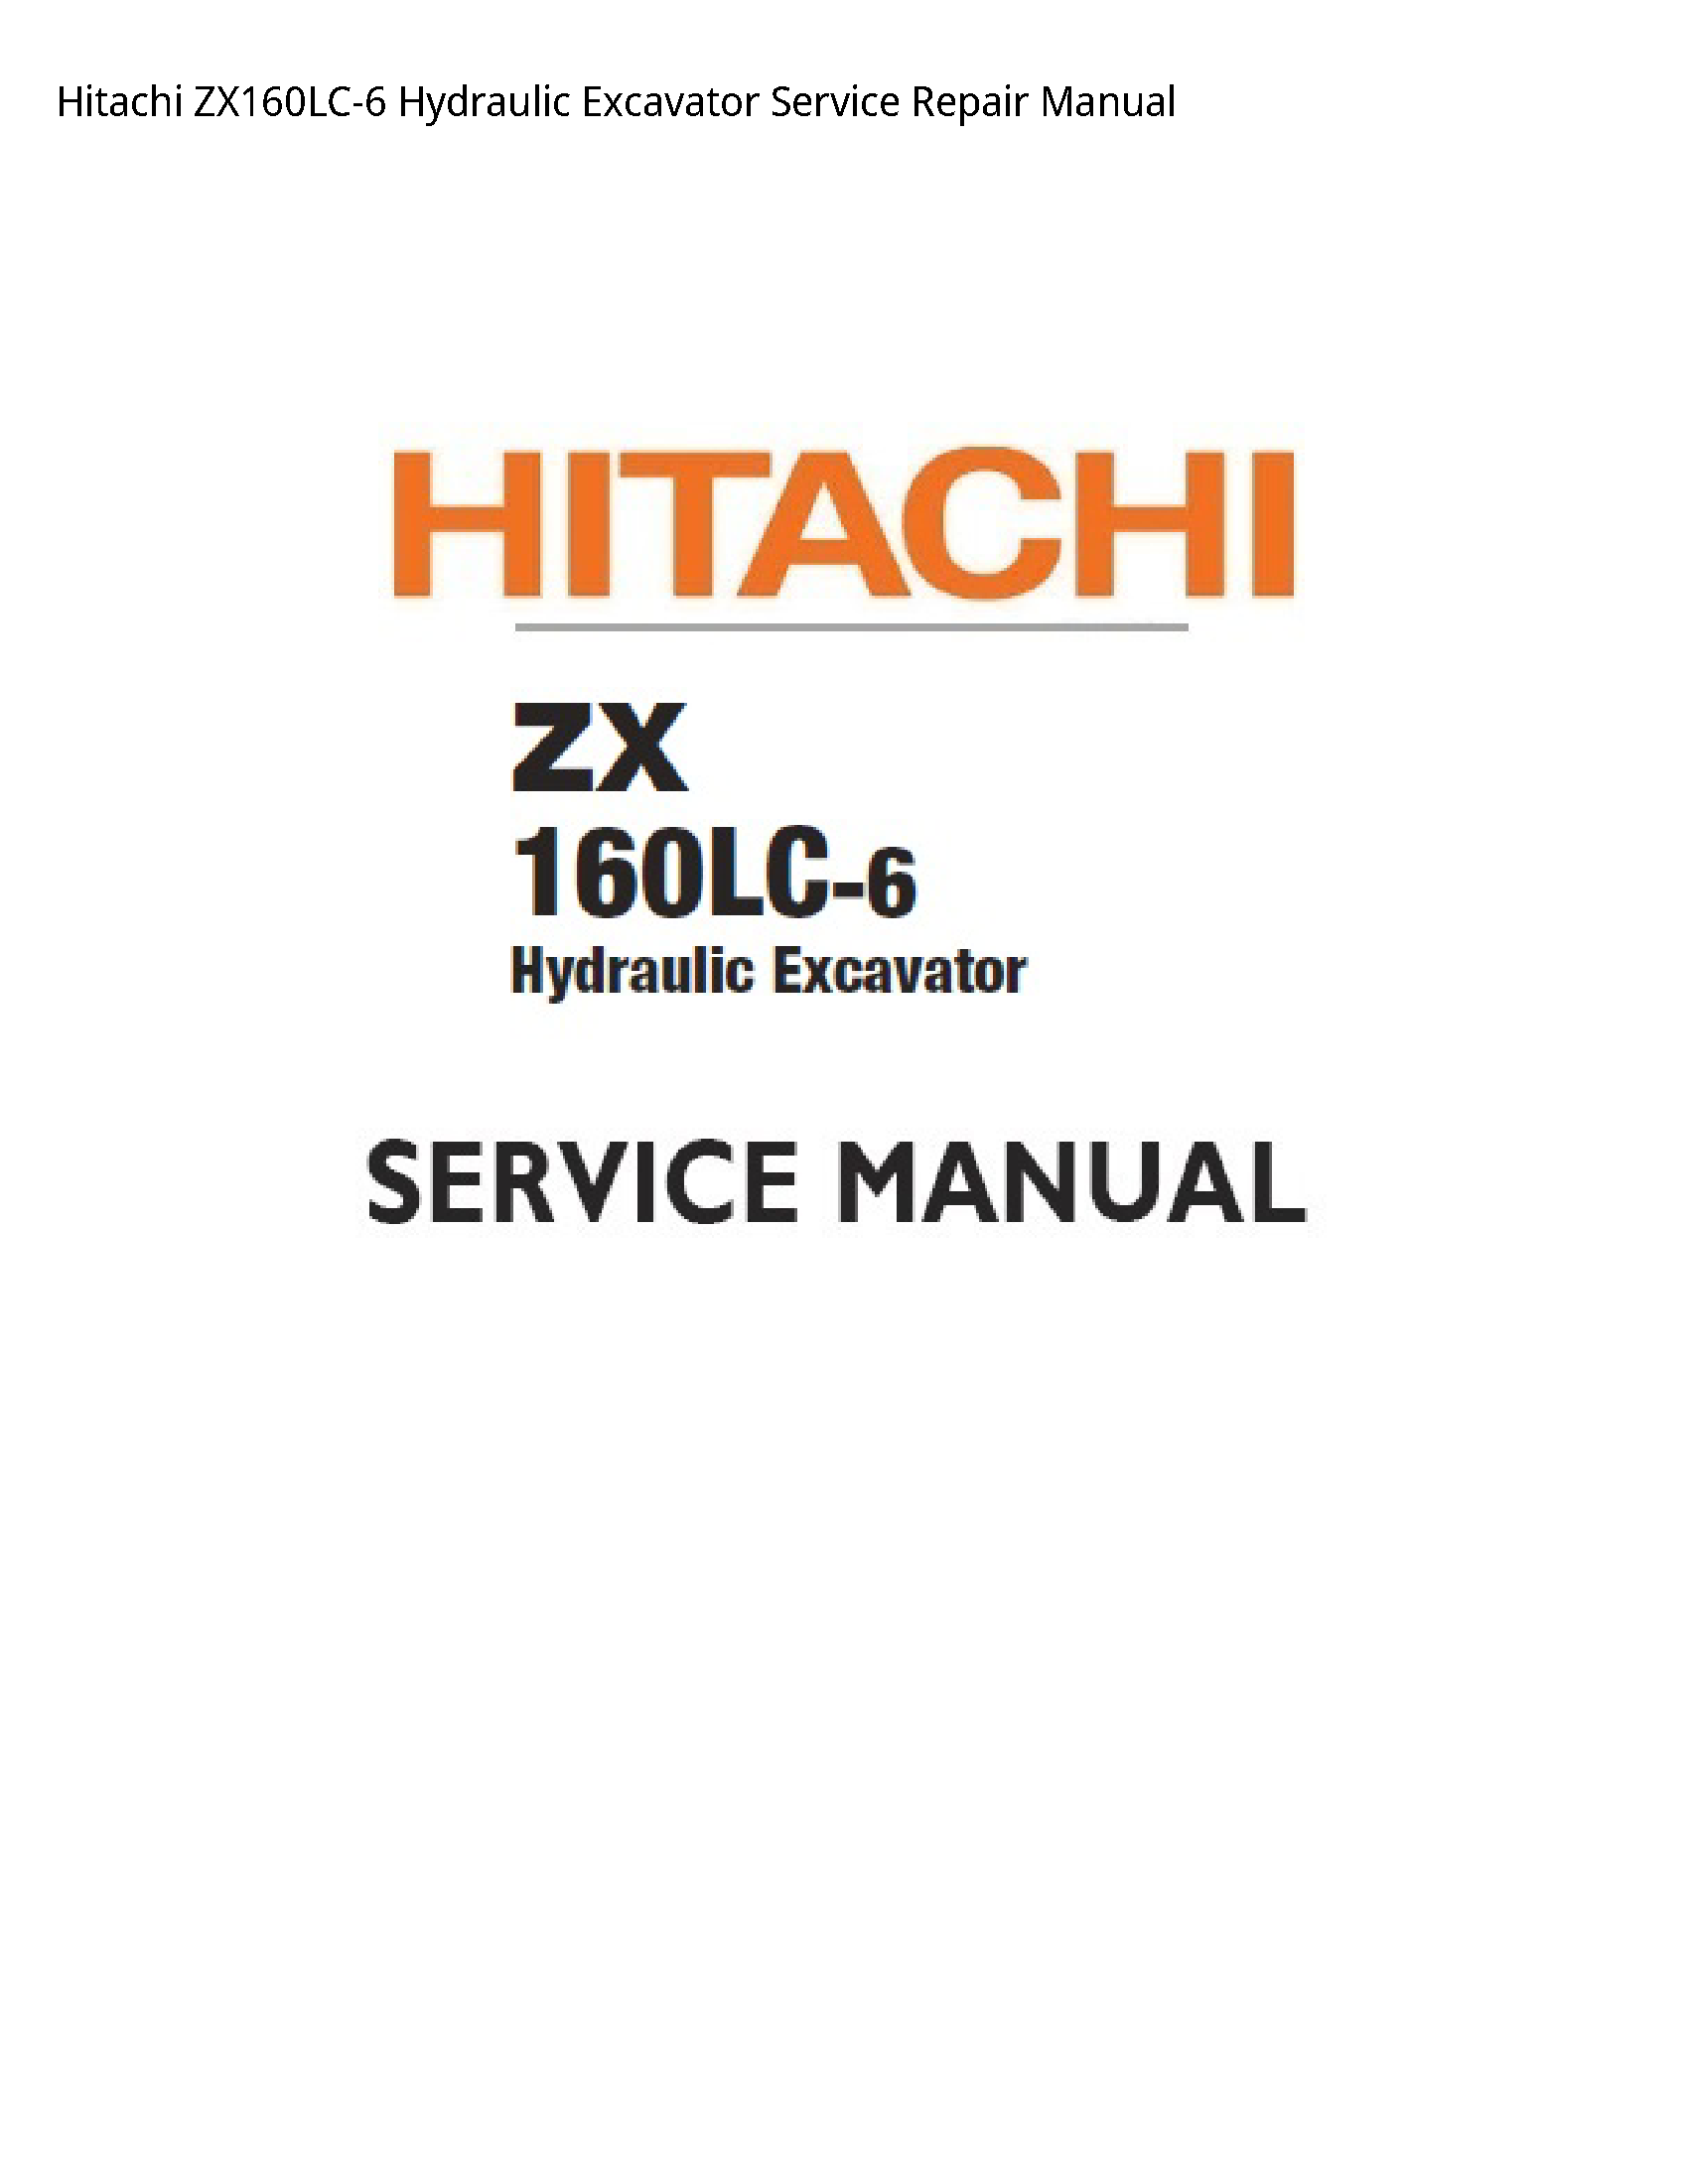 Hitachi ZX160LC-6 Hydraulic Excavator manual